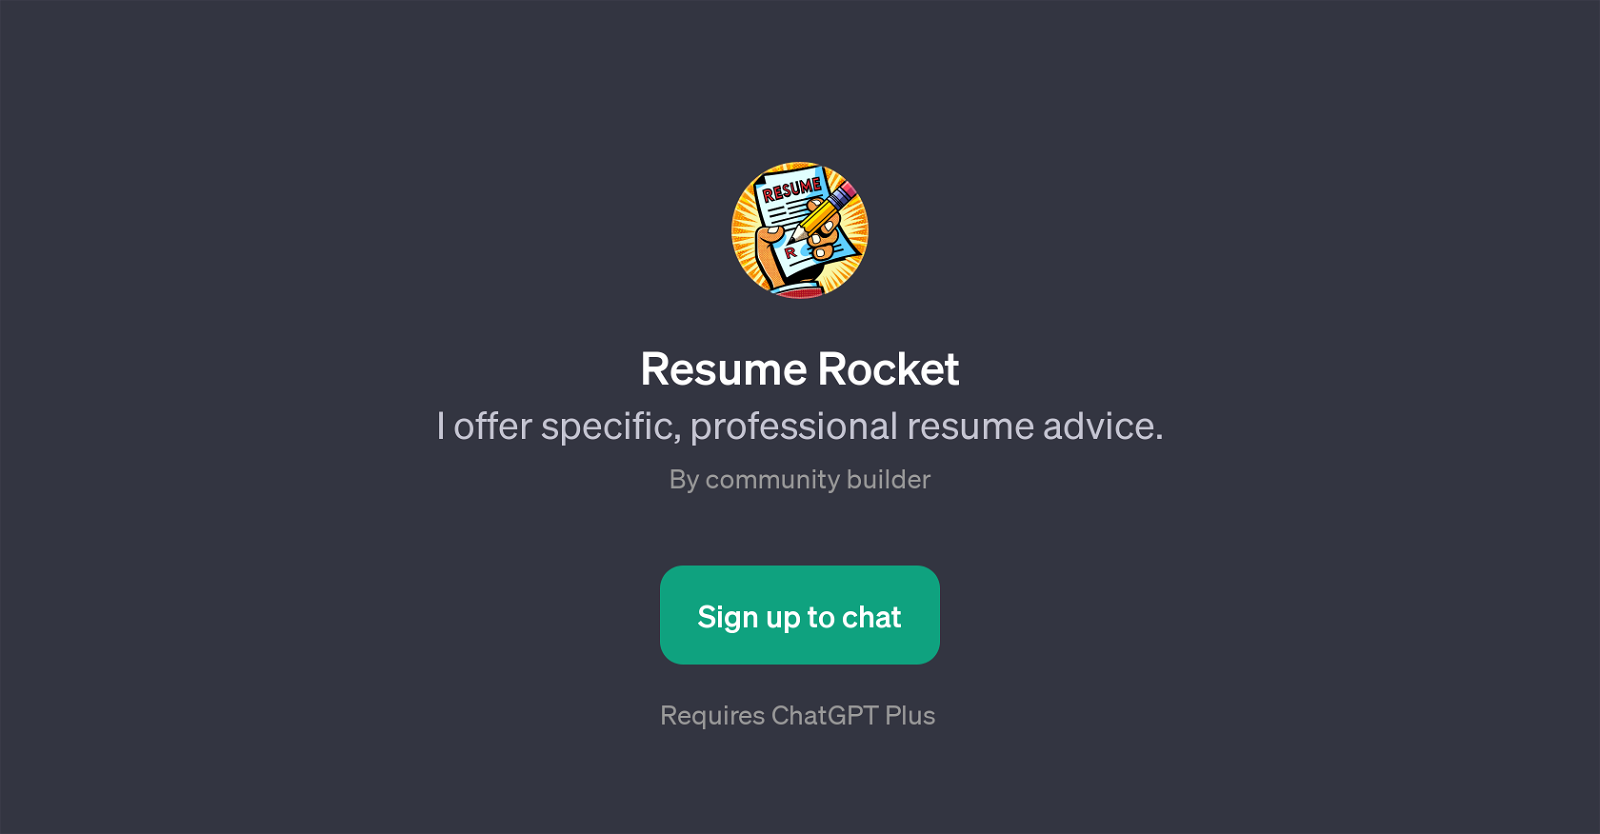 Resume Rocket website